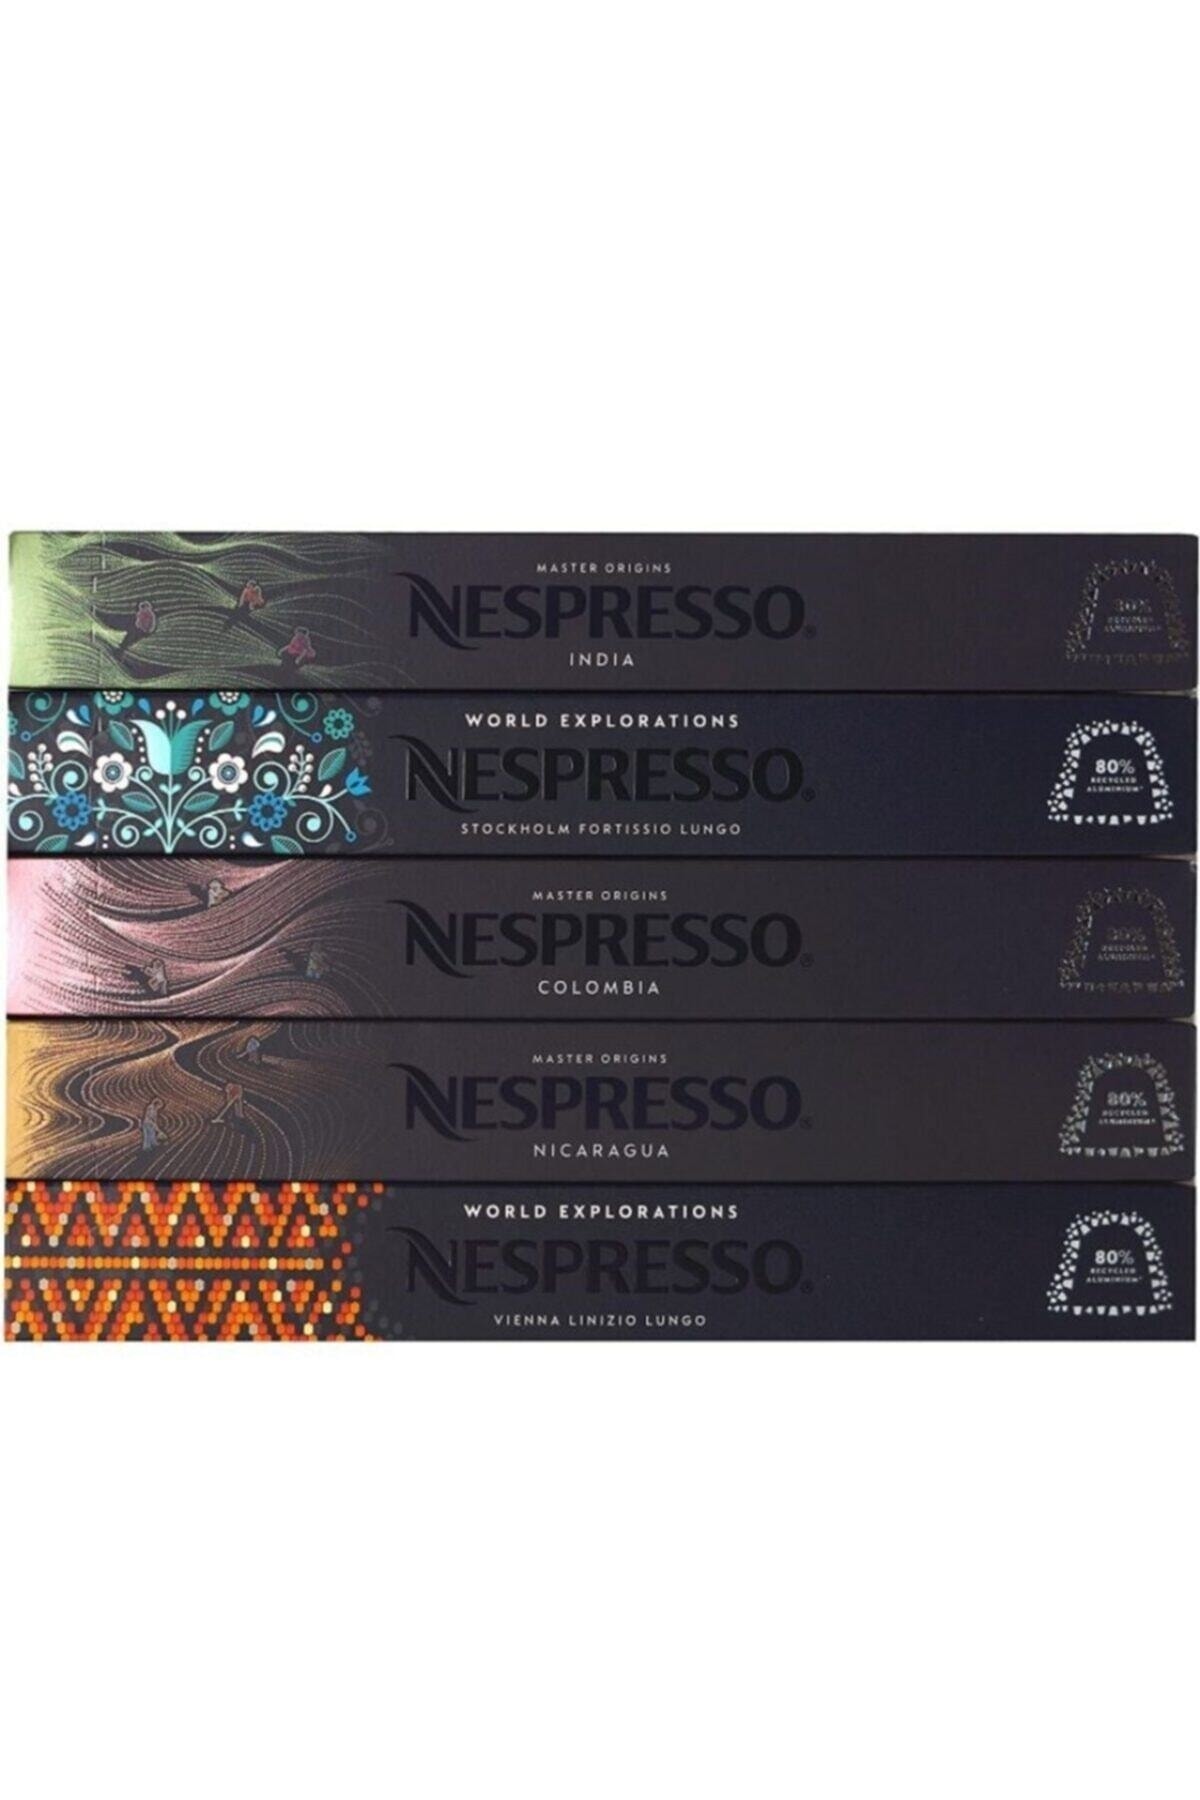 Nespresso Yöresel Zengin Tatlar Serisi 5'li Set India-stockholm-colombia-nicaragua-linizio